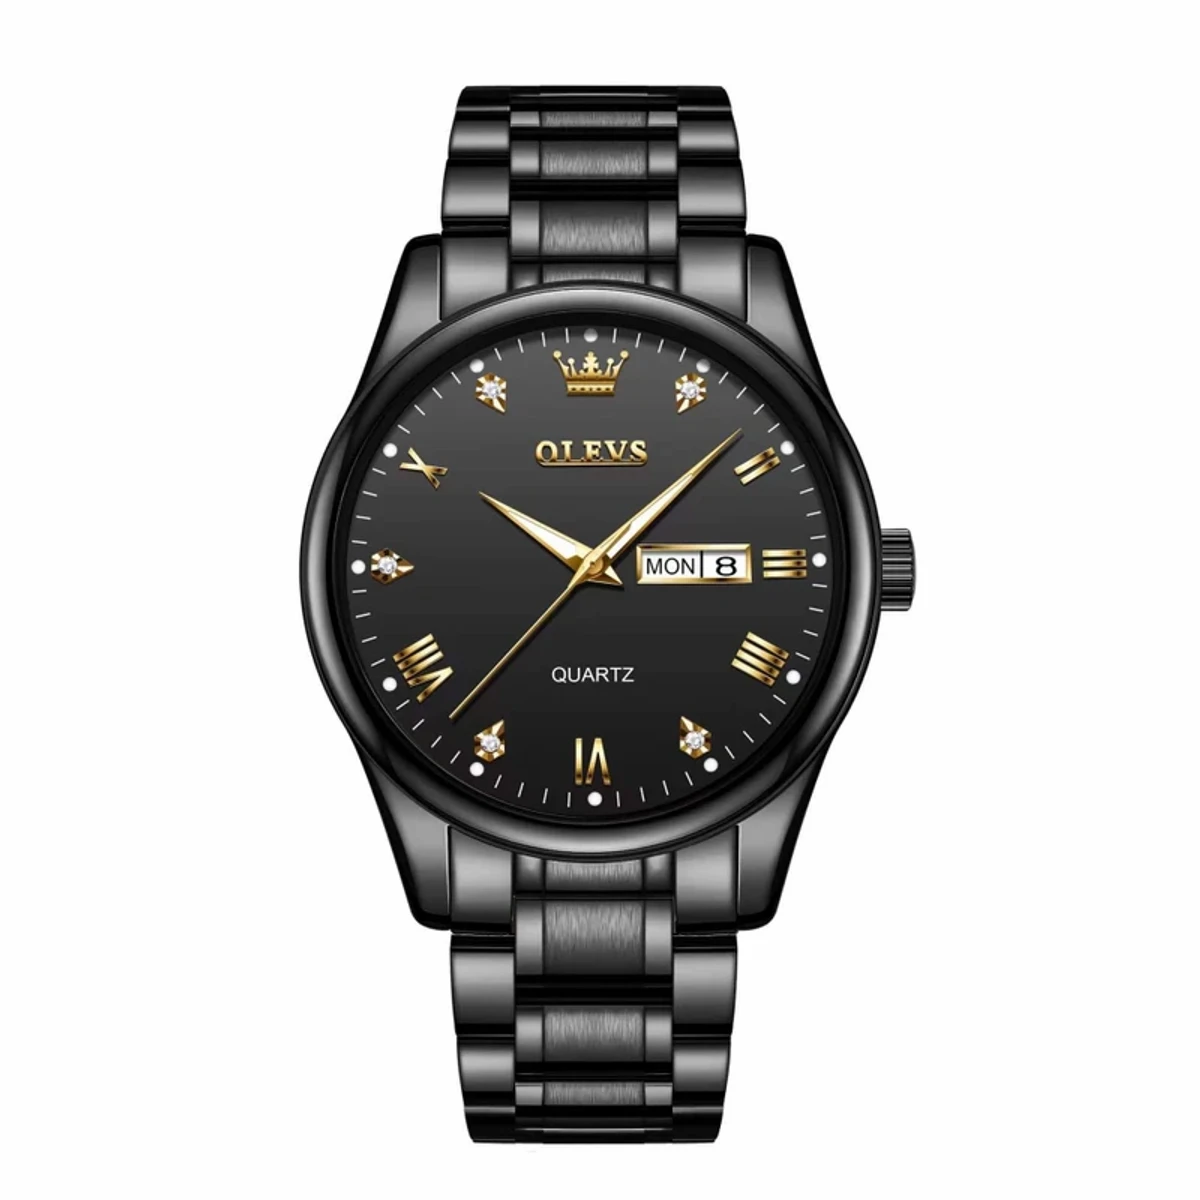 Olevs Model 5563 Black Stainless Steel Analog Wrist Watch For Men - 5563 FULL Black COOLER WATCH MAN